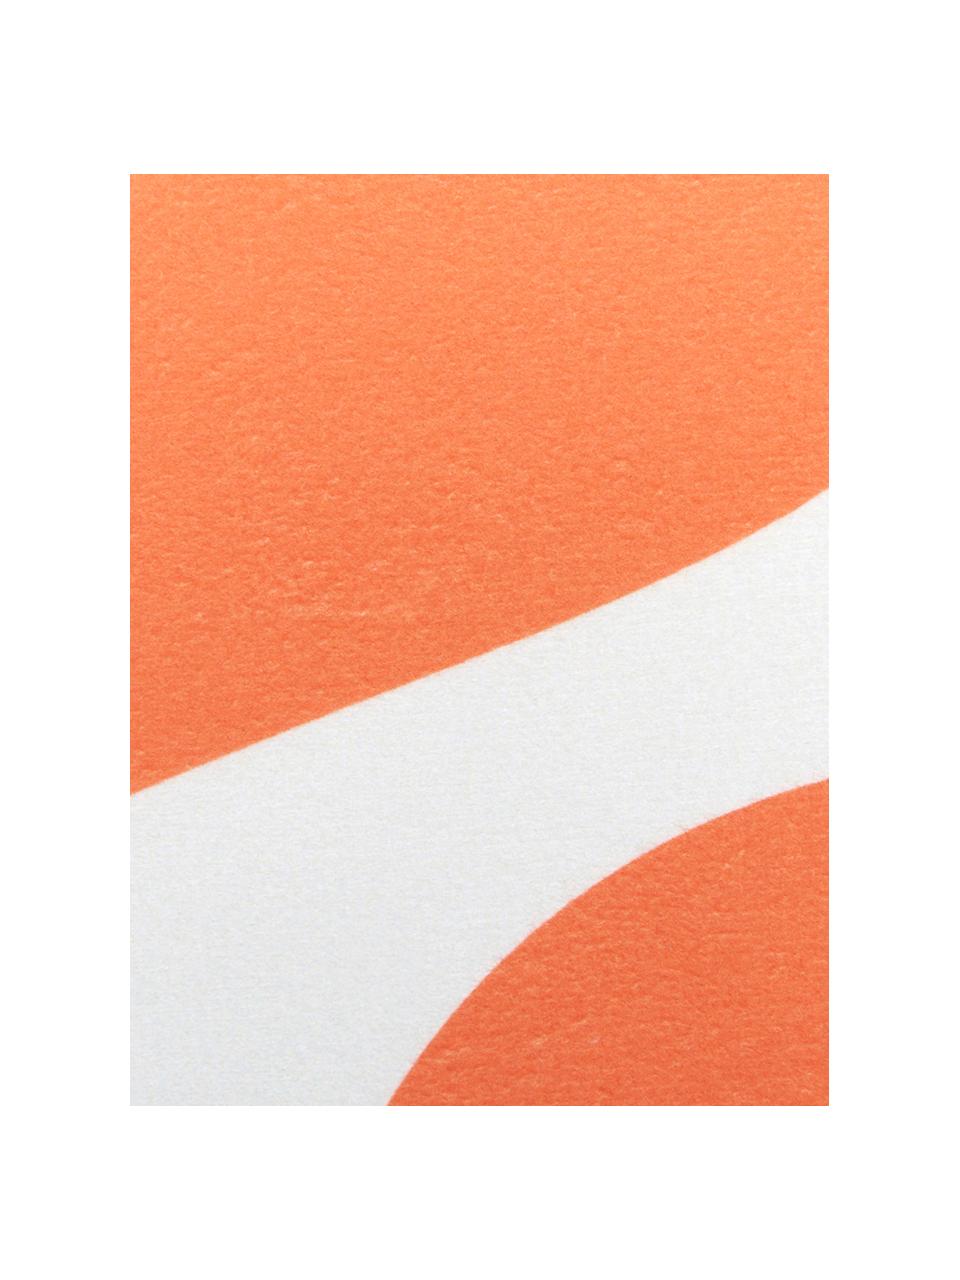 Licht strandlaken Ciao, 55% polyester, 45% katoen zeer lichte kwaliteit, 340 g/m², Wit, oranje, 70 x 150 cm